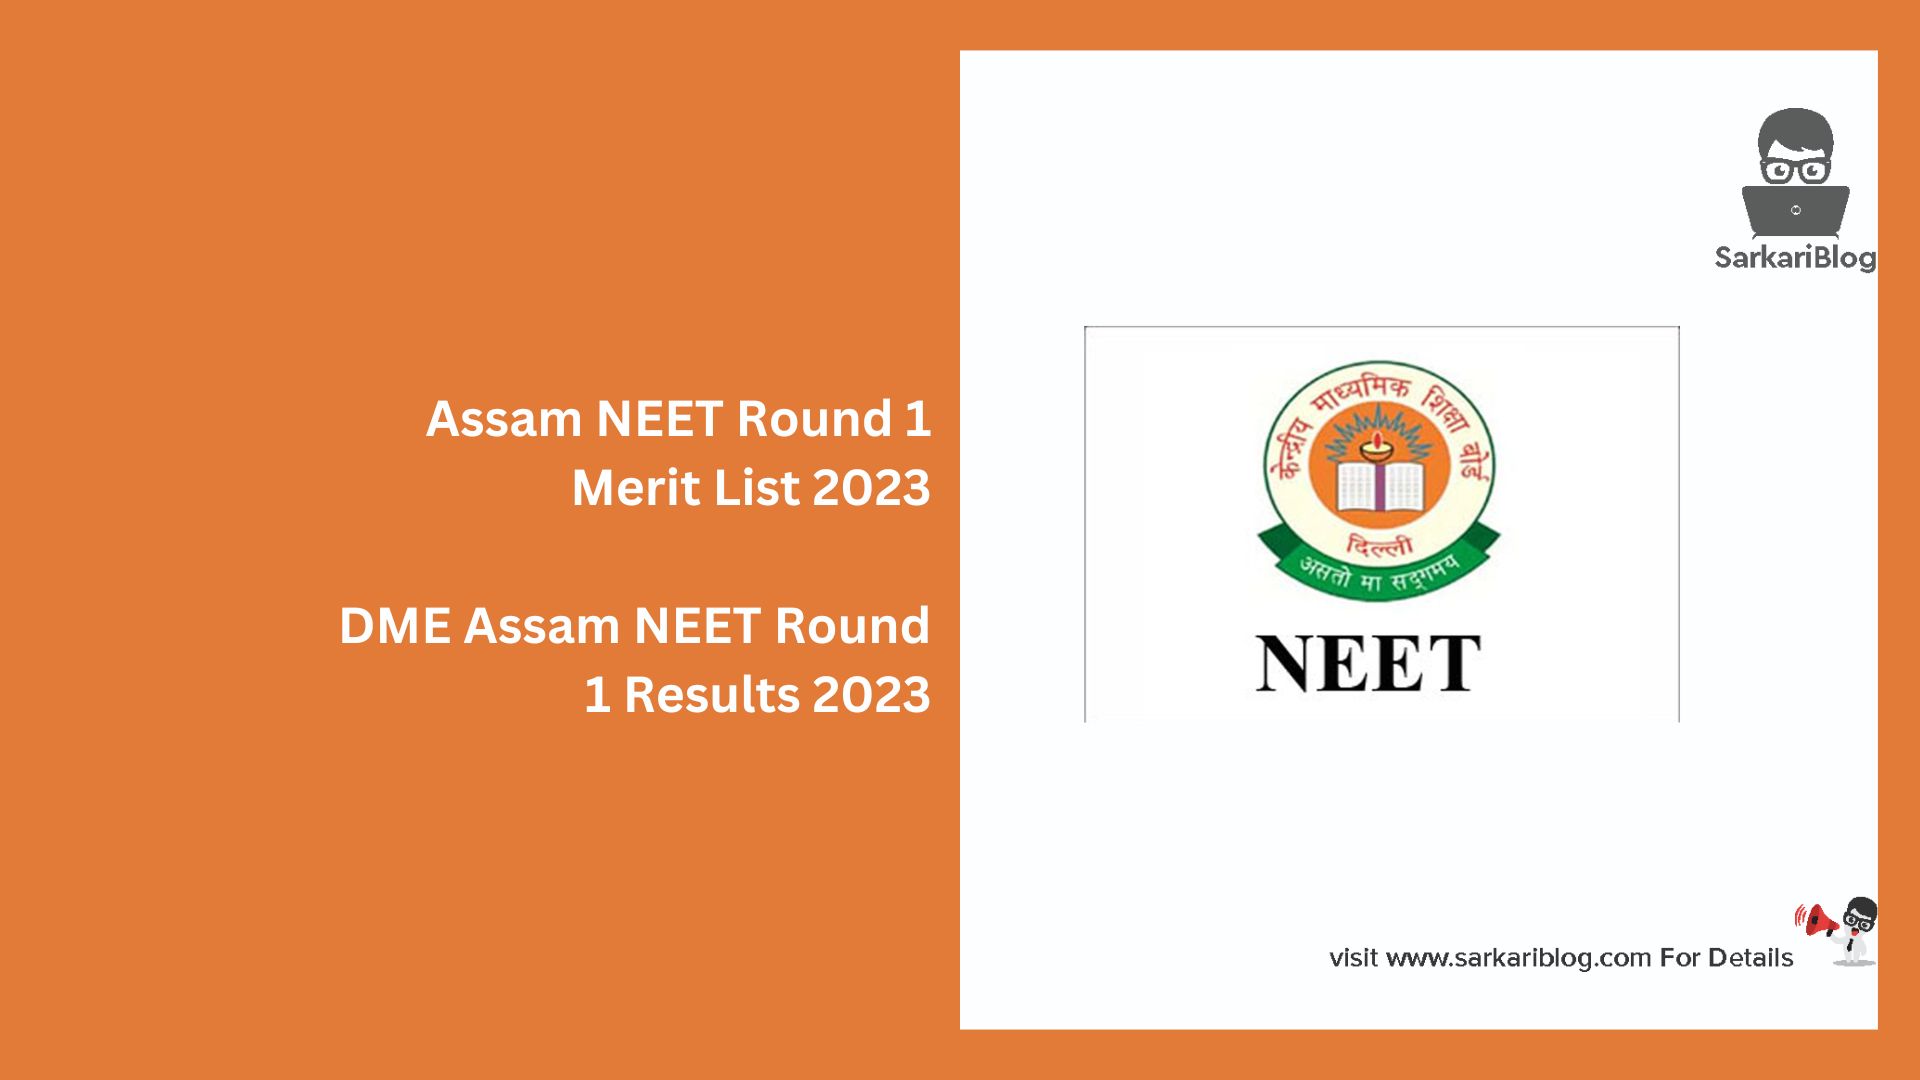 Assam NEET Round 1 Merit List 2023